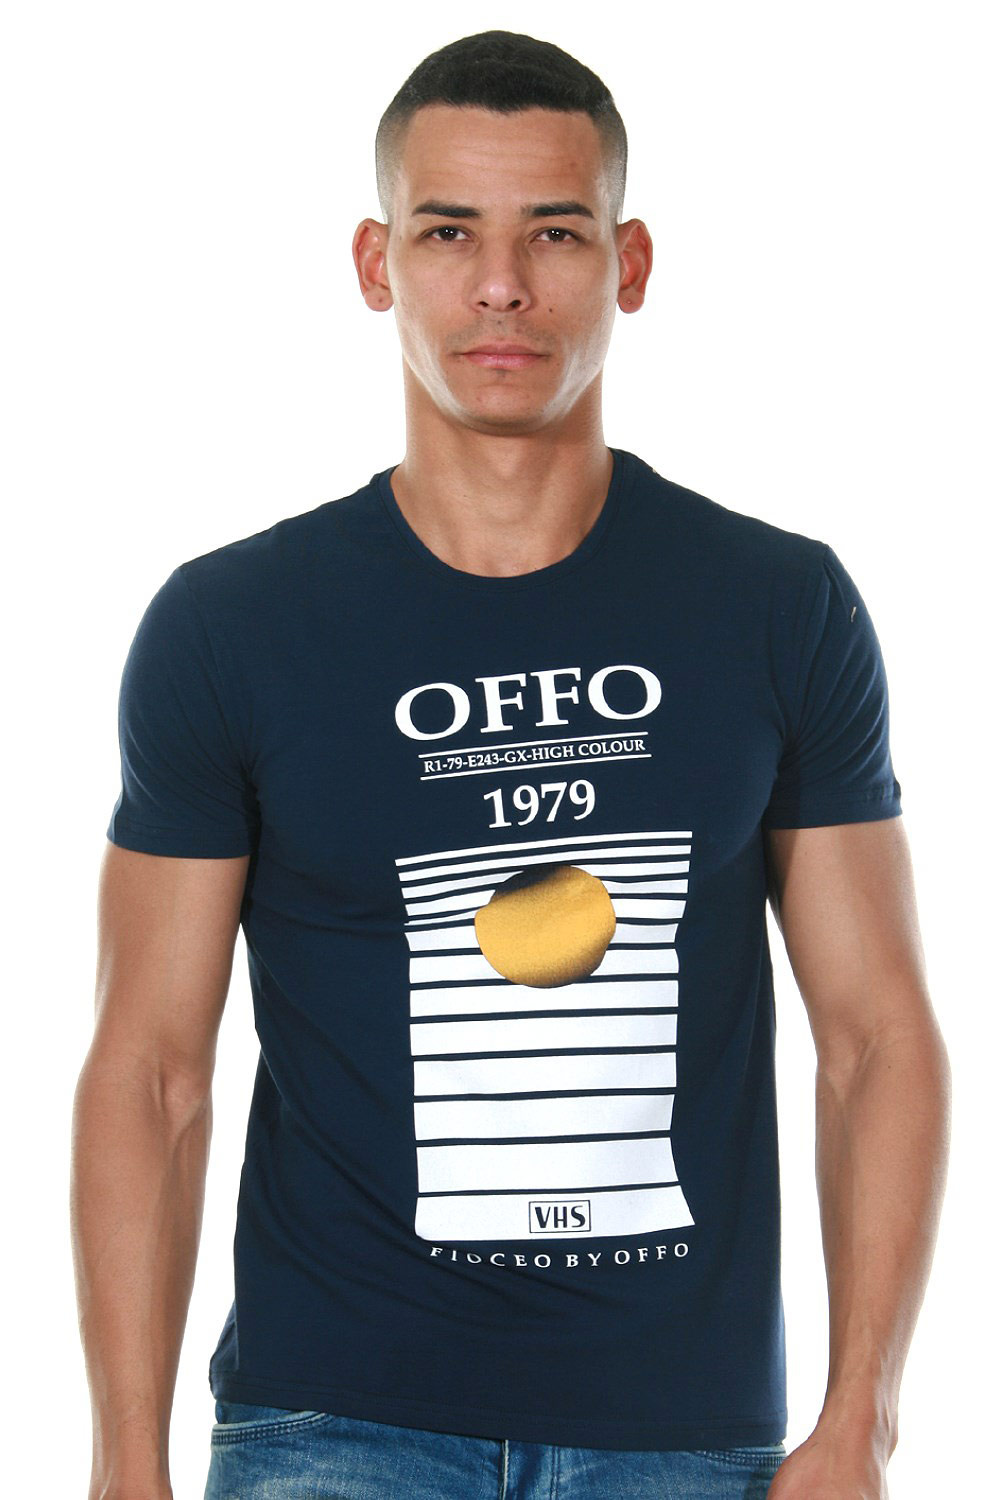 FIOCEO T-Shirt auf oboy.de auf oboy.de